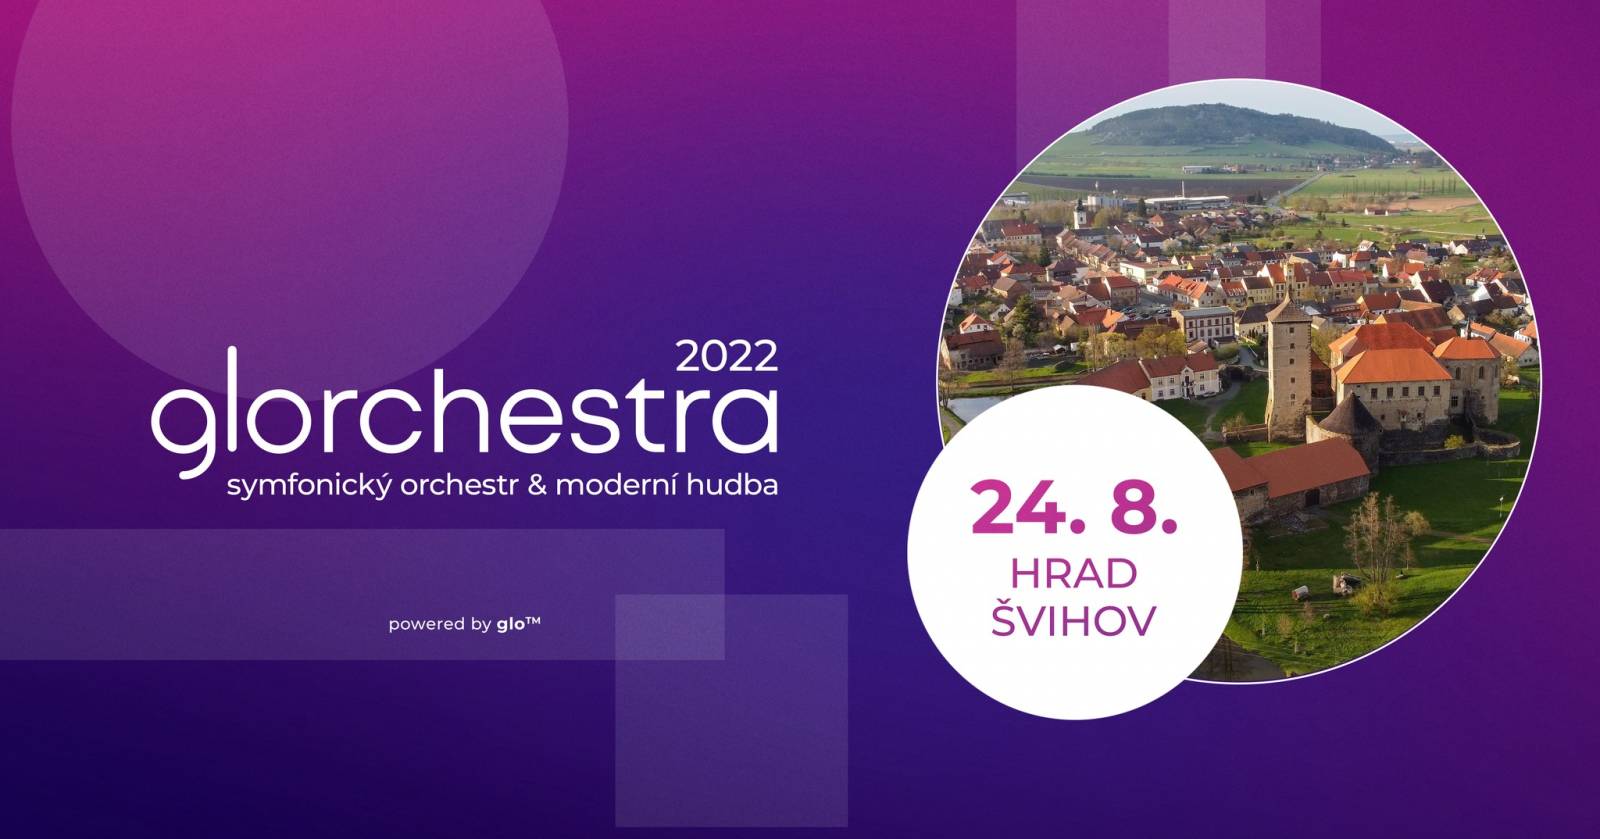 Glorchestra 2022